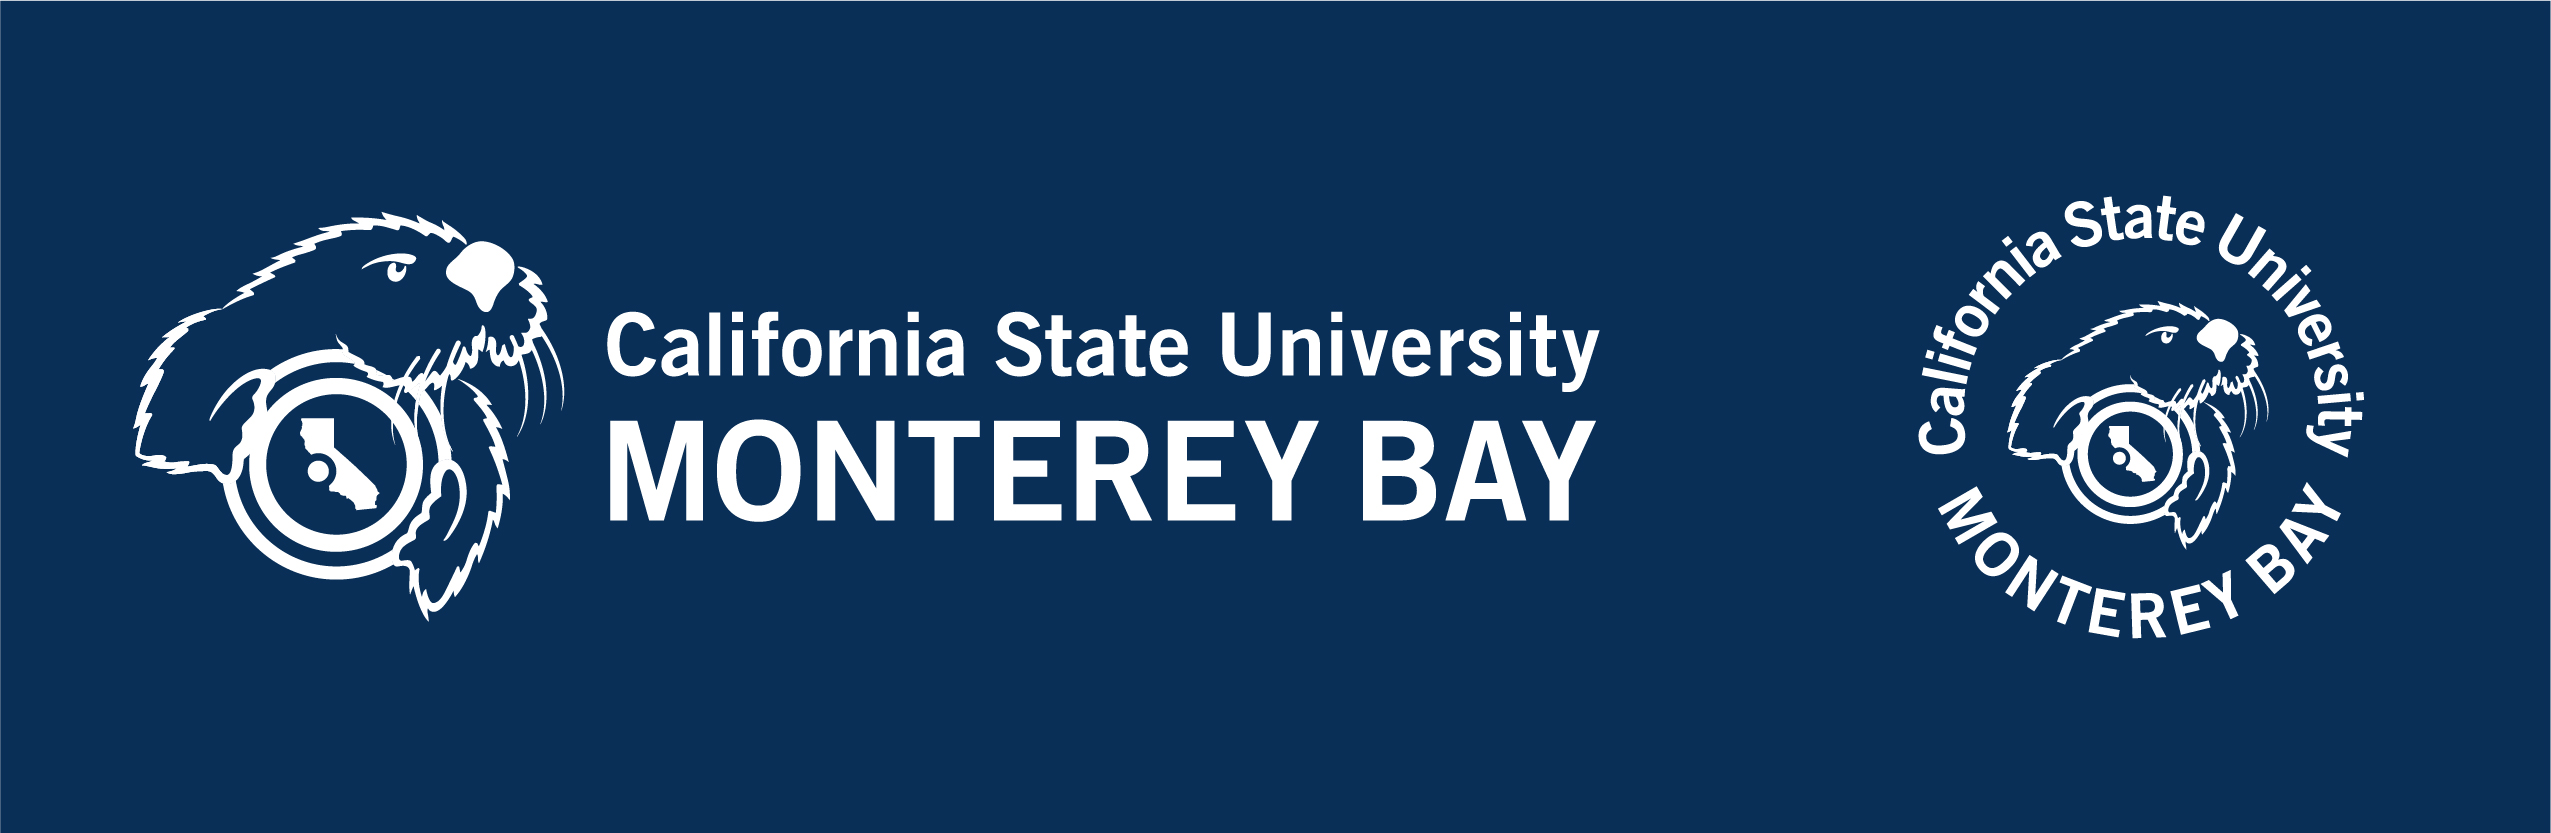 CSU Monterey Bay logo